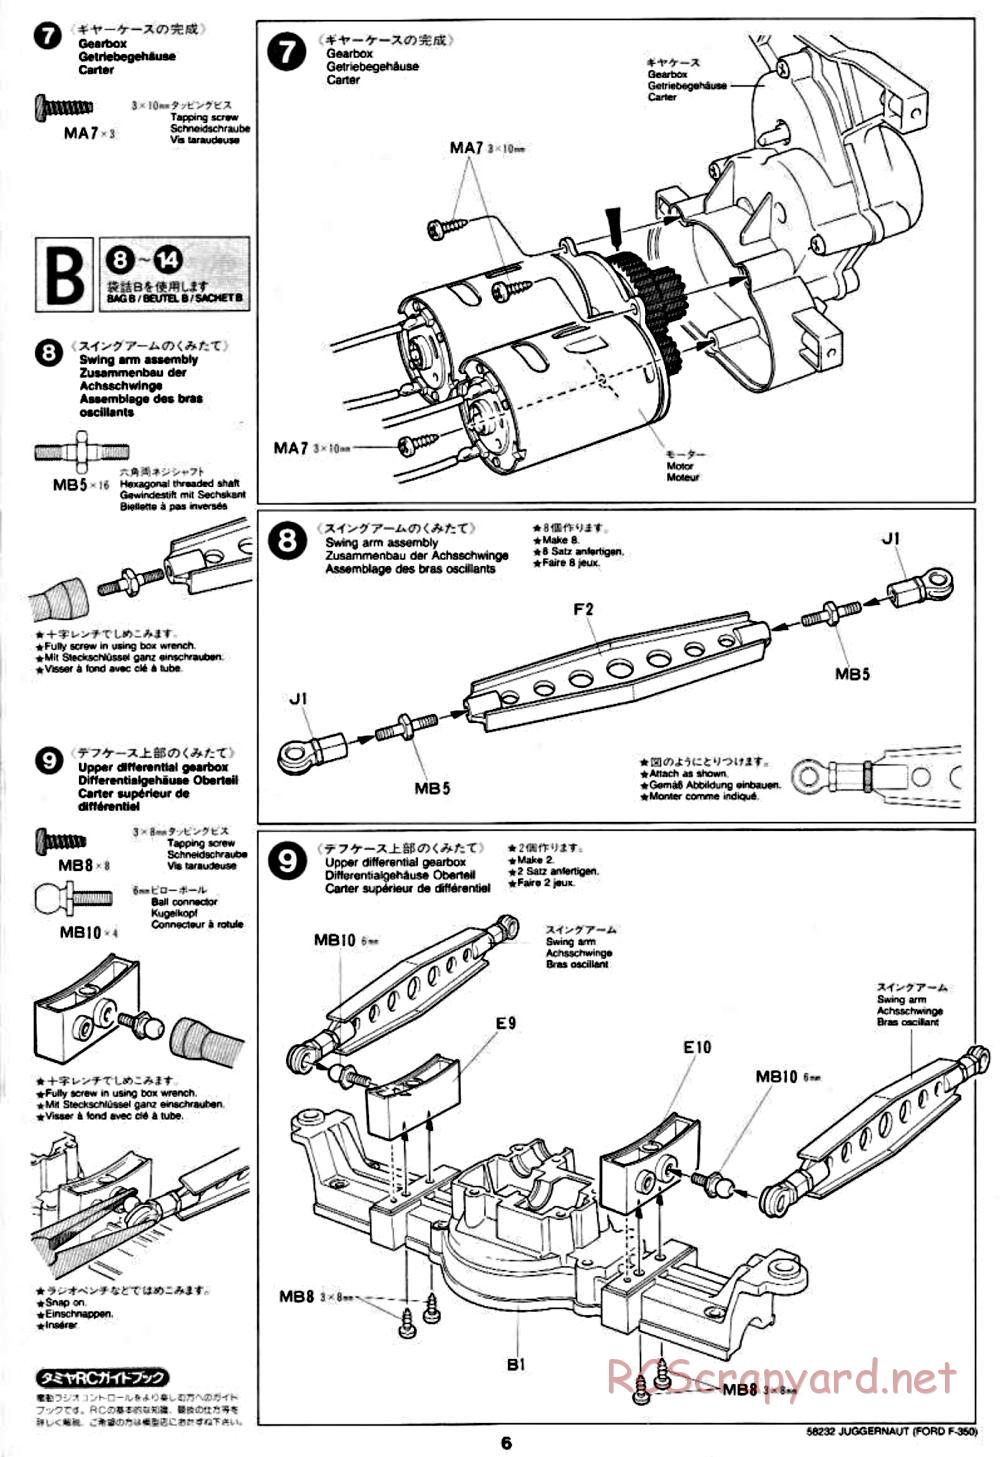 Tamiya - Juggernaut Chassis - Manual - Page 6